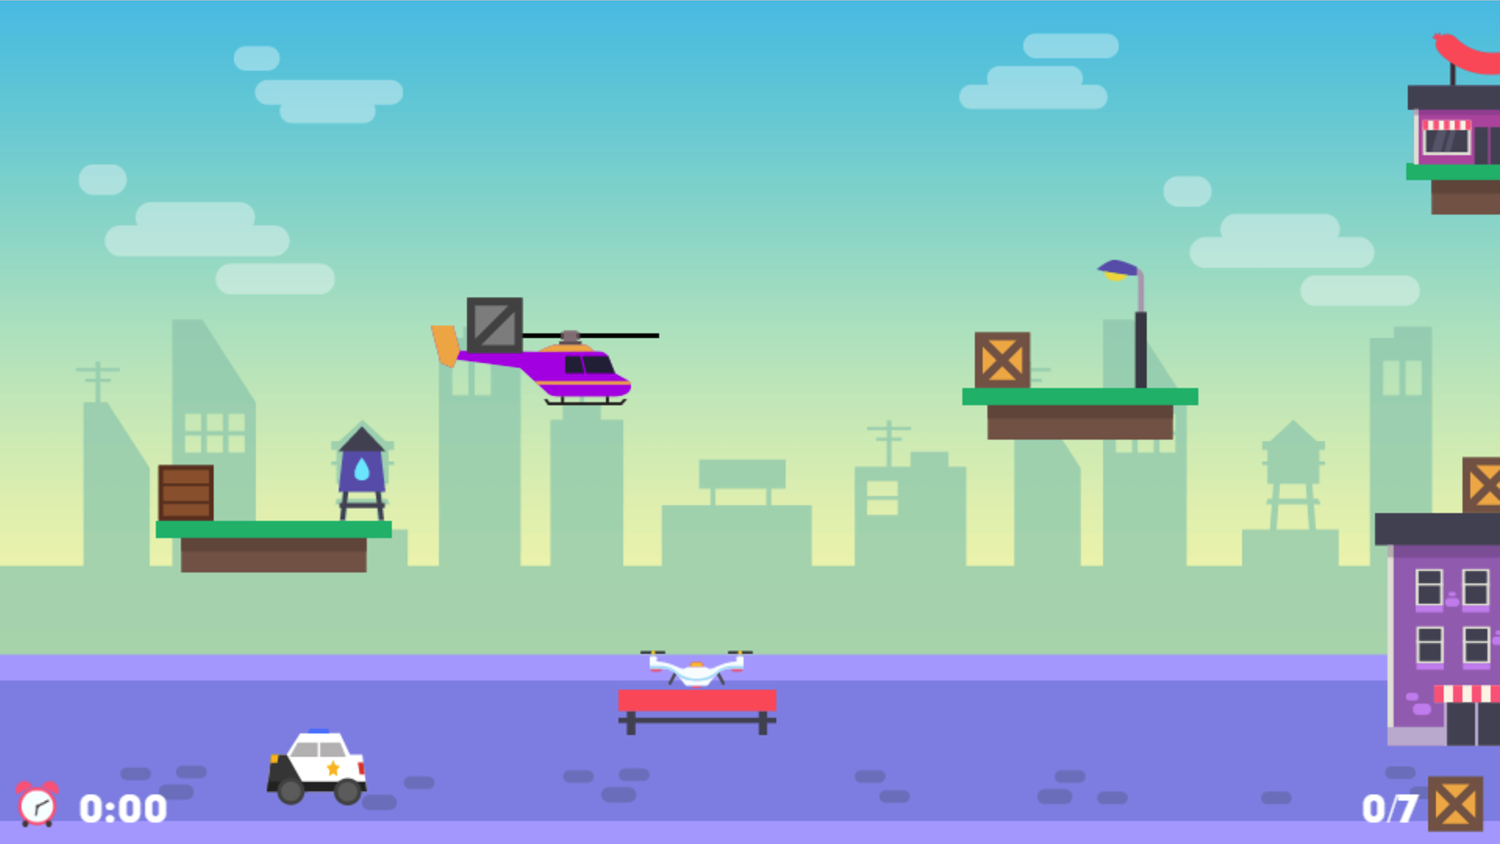 Drone Pickup Service Game Screenshot.